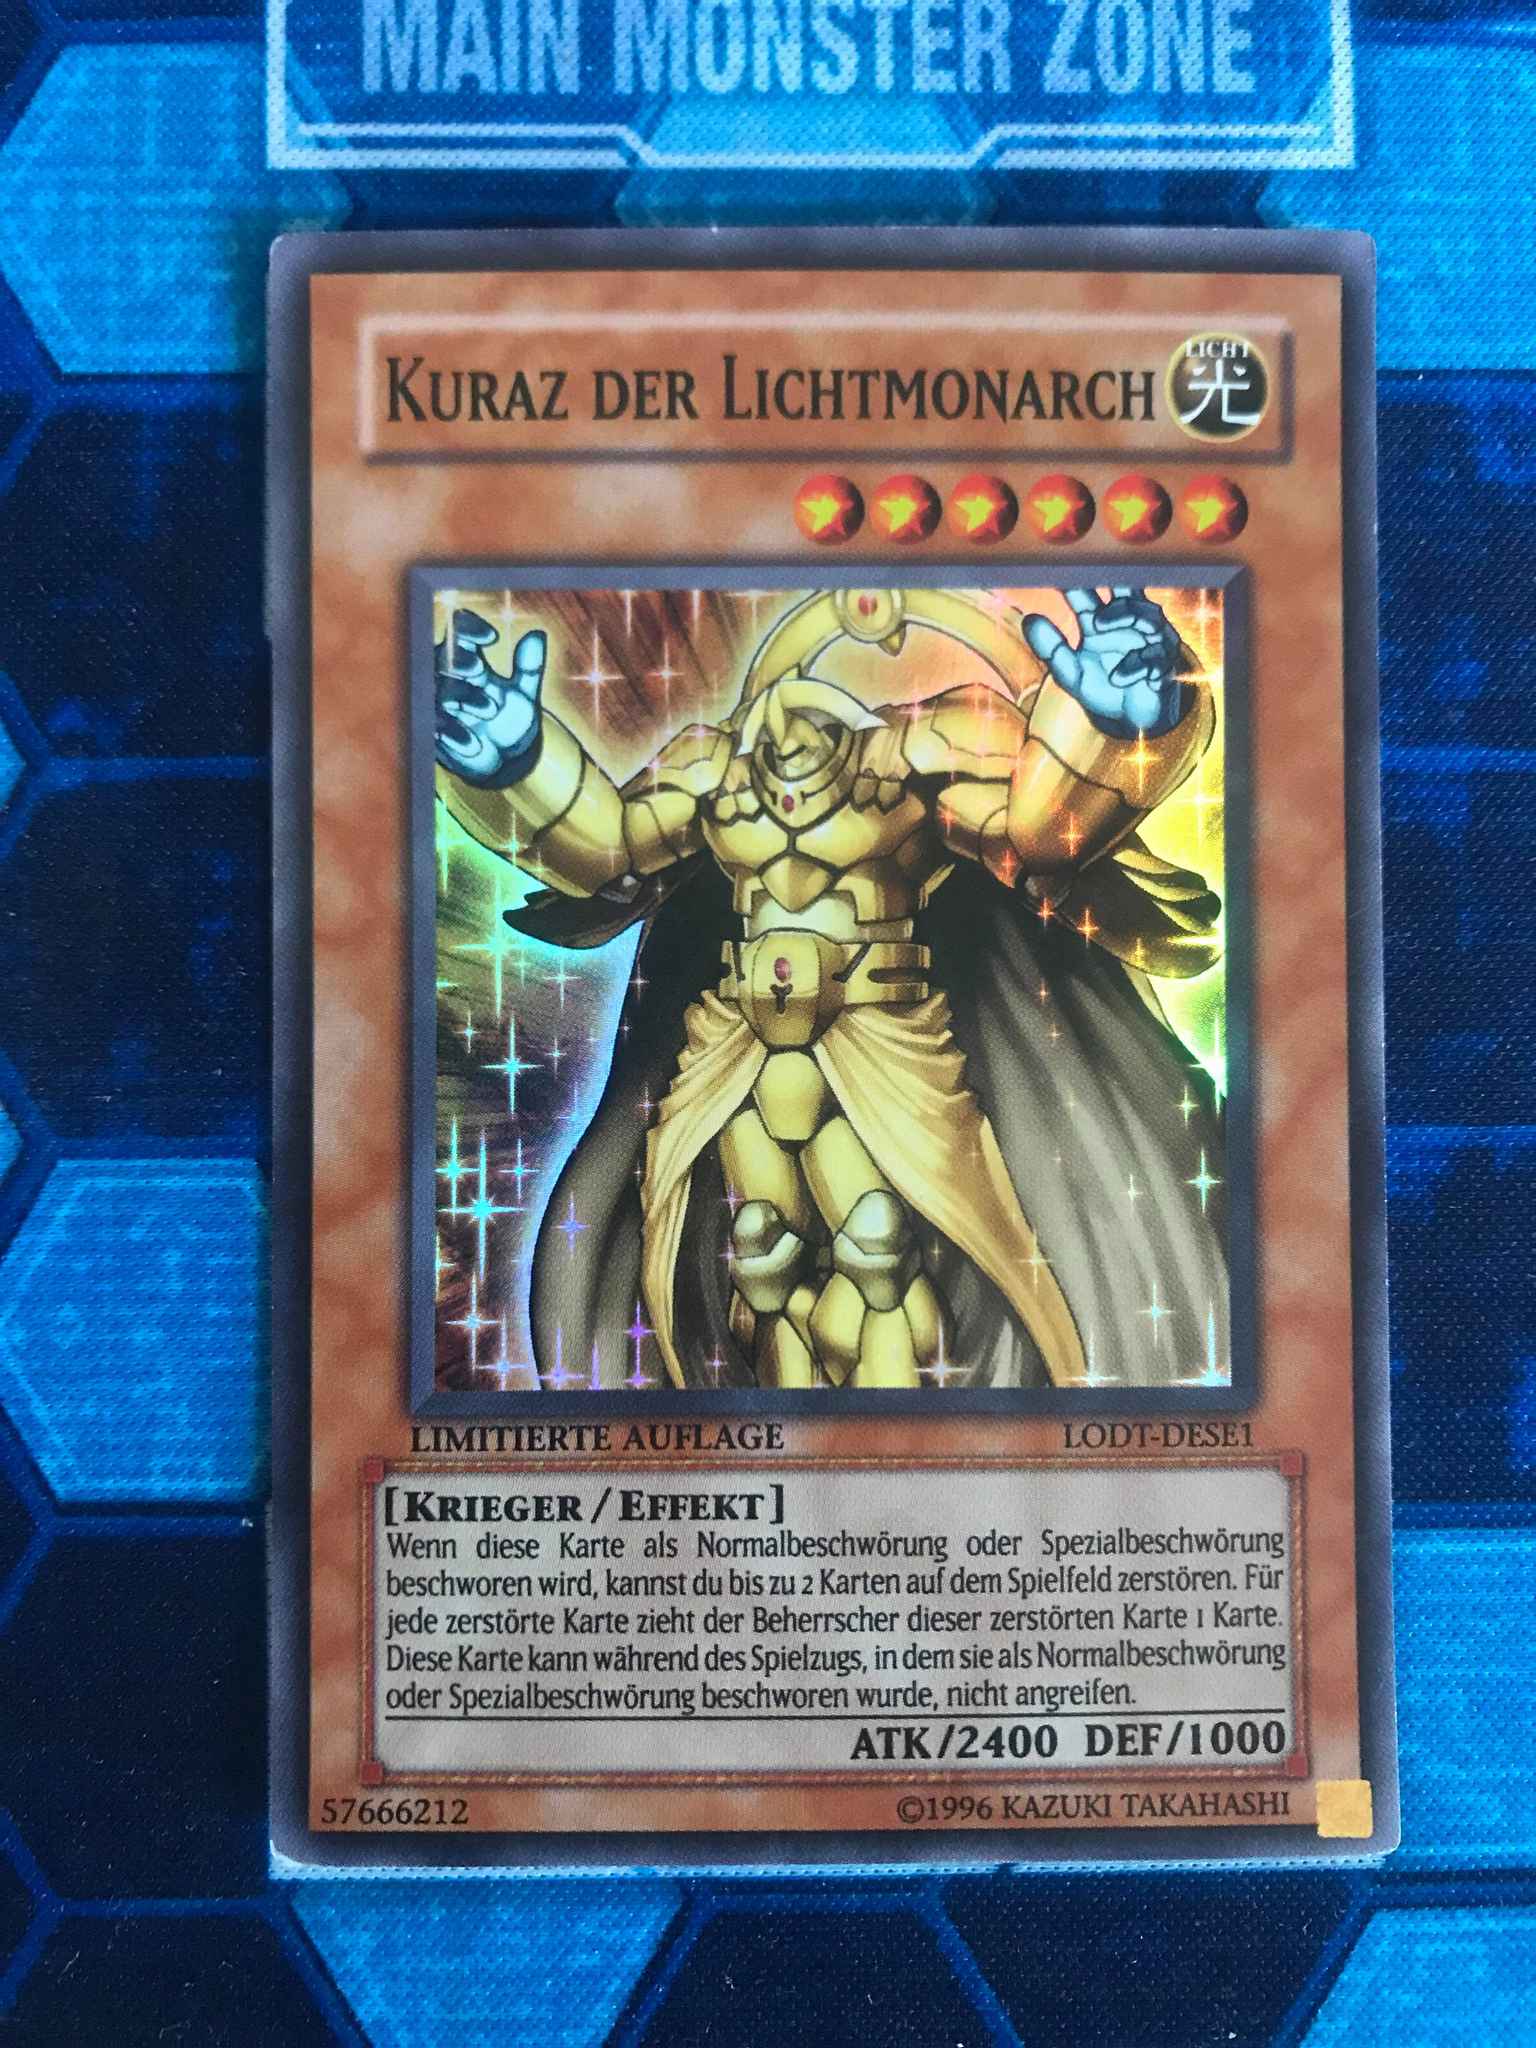 GERMAN LODT-DESE1 Kuraz the Light Monarch Super Rare Limited NM YUGIOH 